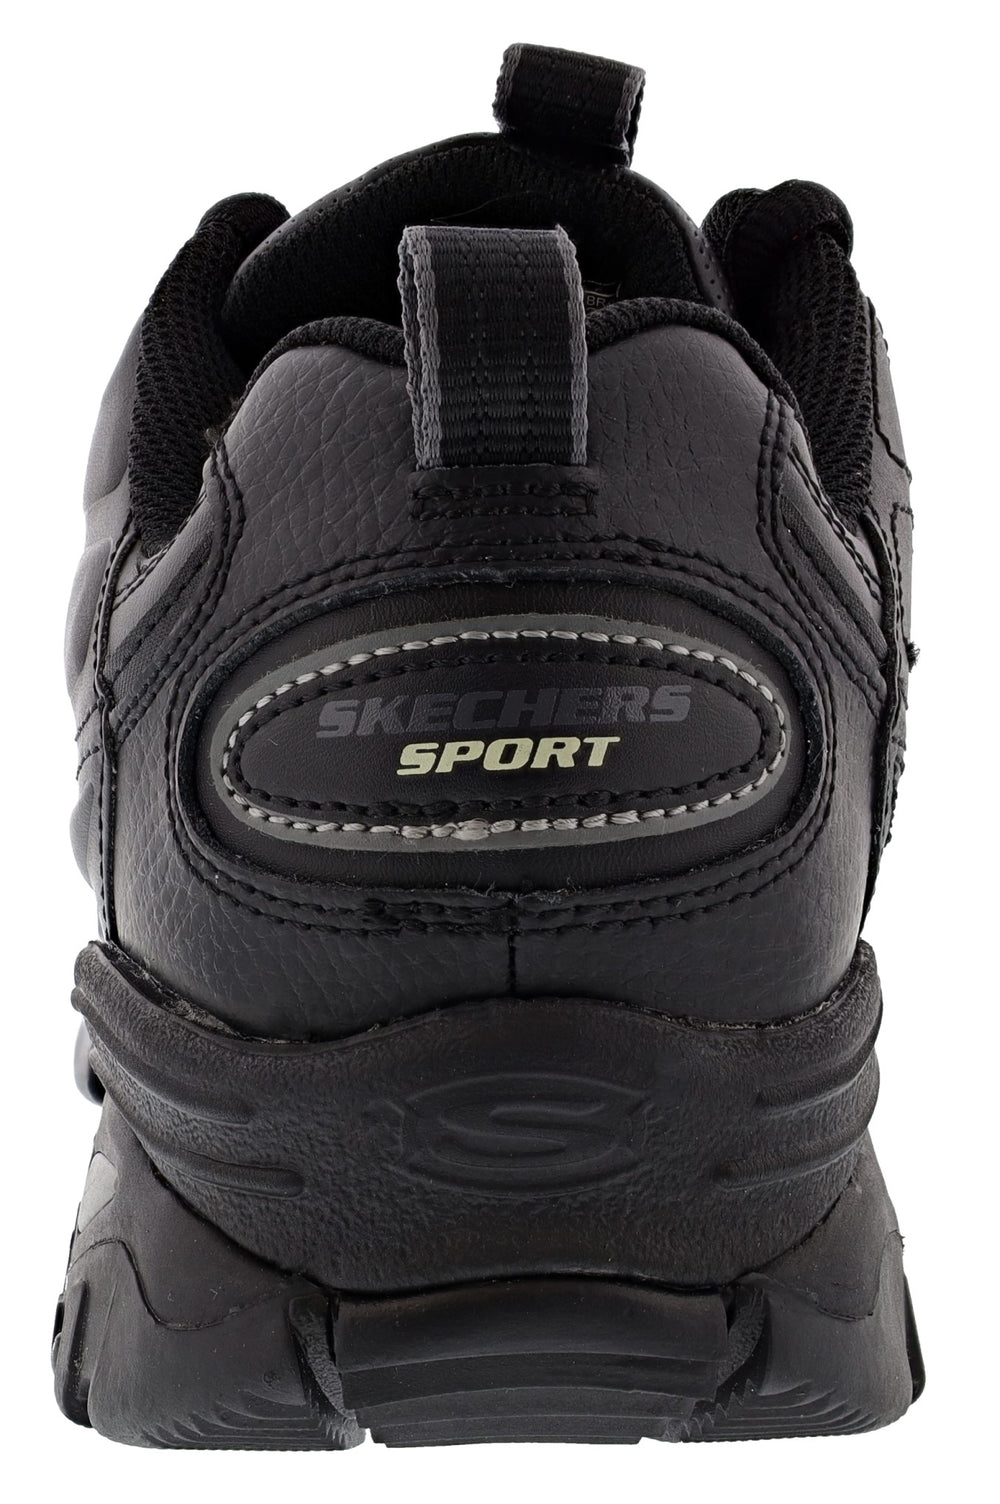 Skechers Energy After burn Wide Width Road Running Shoes Men's | adidas Seeley xt Men's Shoes | discoverysurveys